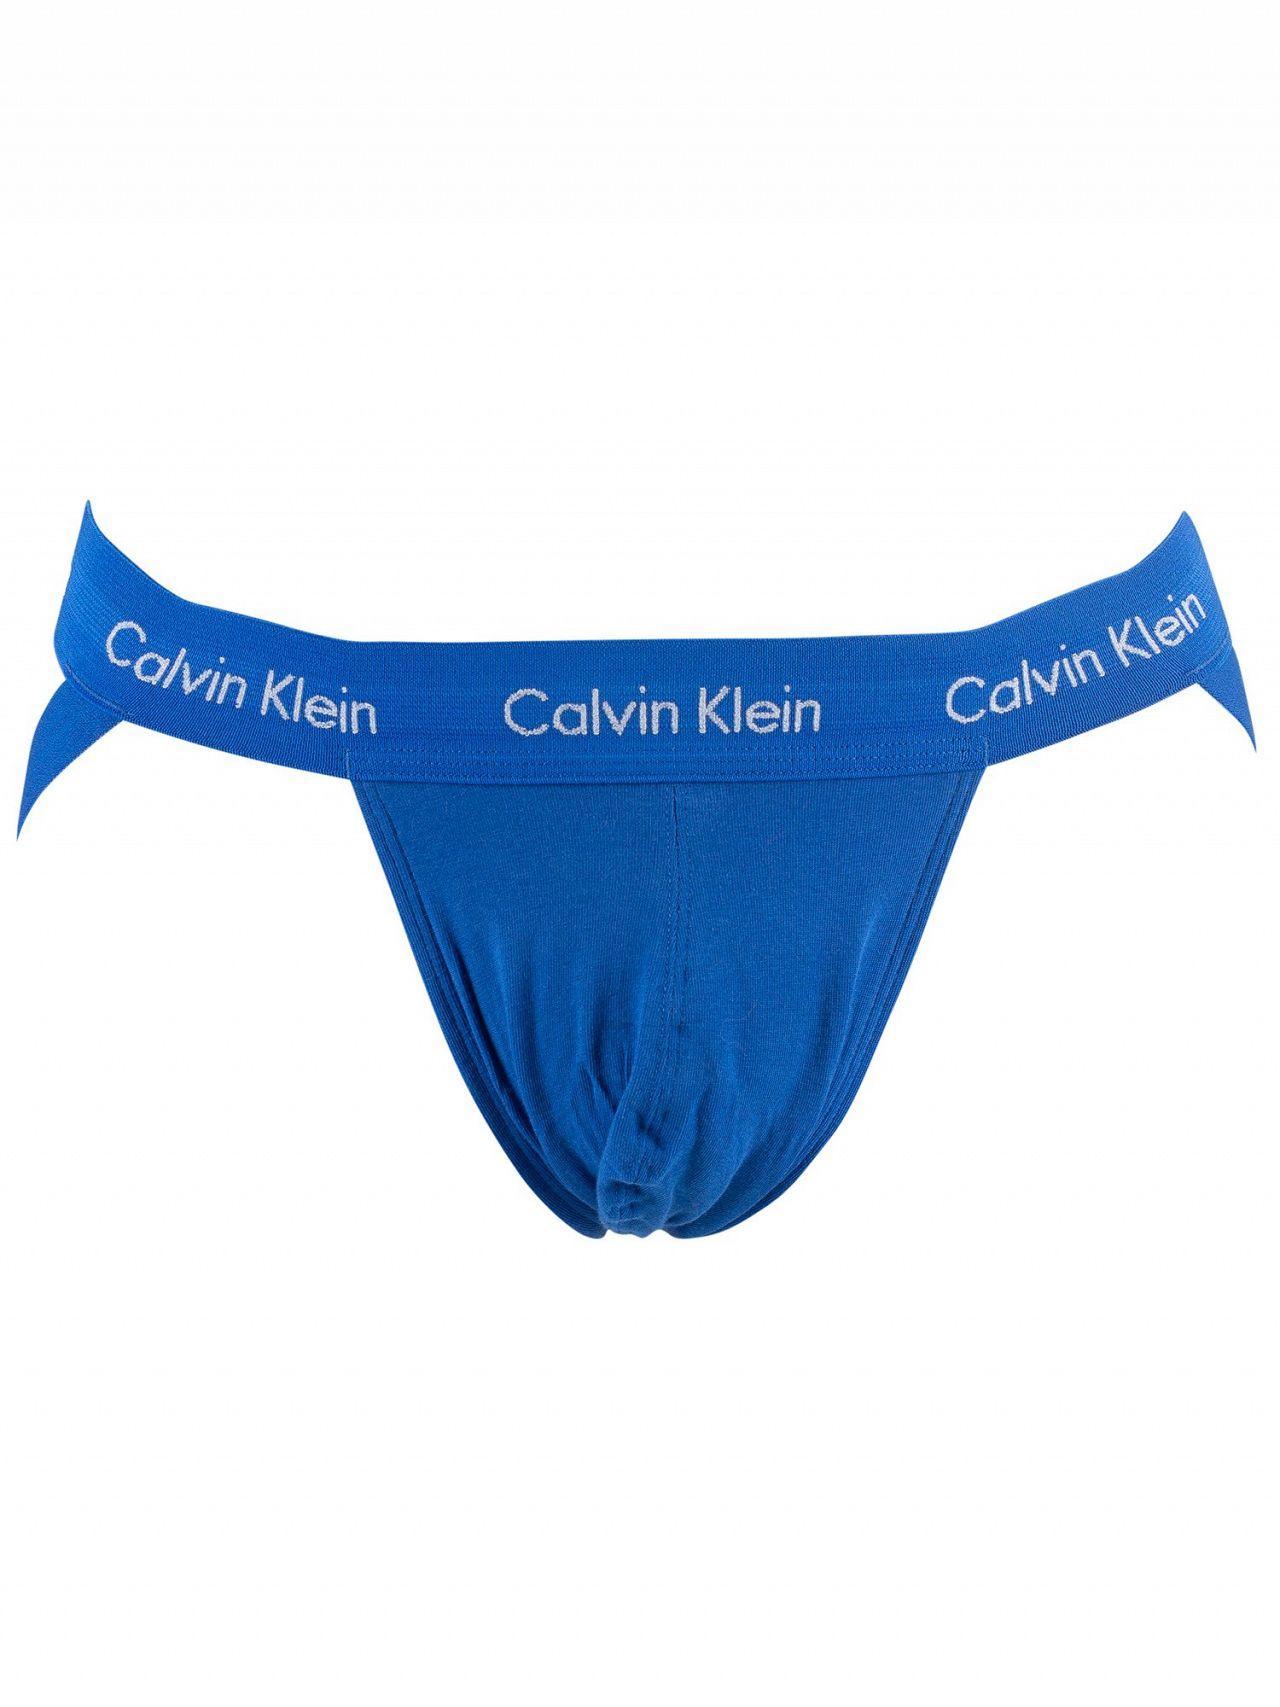 Calvin Klein Cotton Pride Colours 5 Pack Jockstraps for Men - Lyst